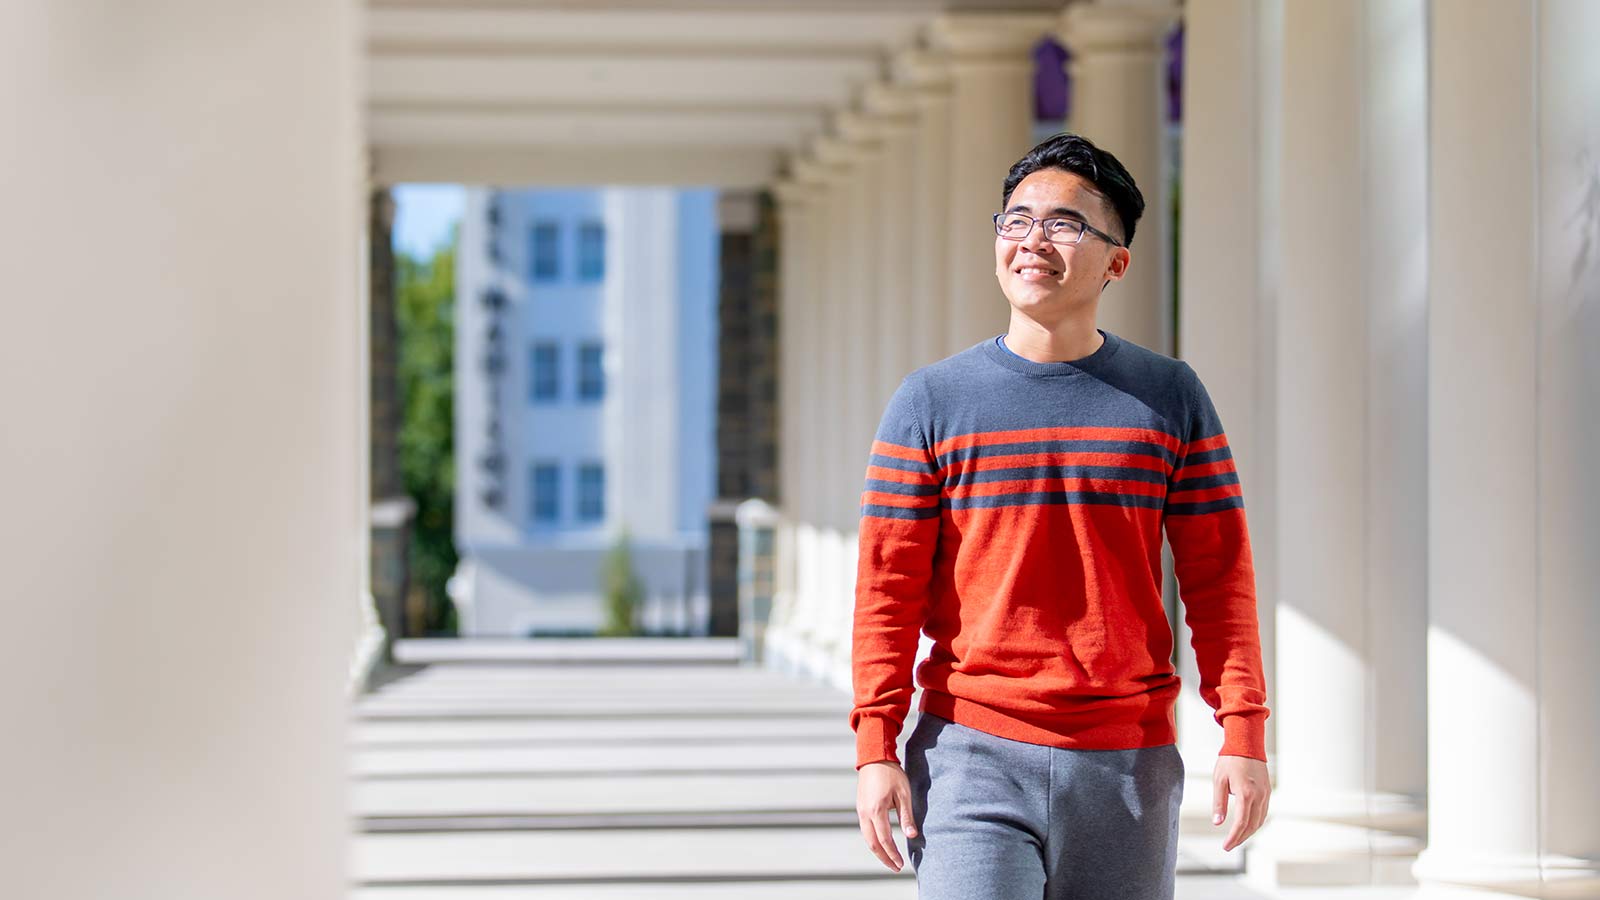 A James Madison University student walking through campus